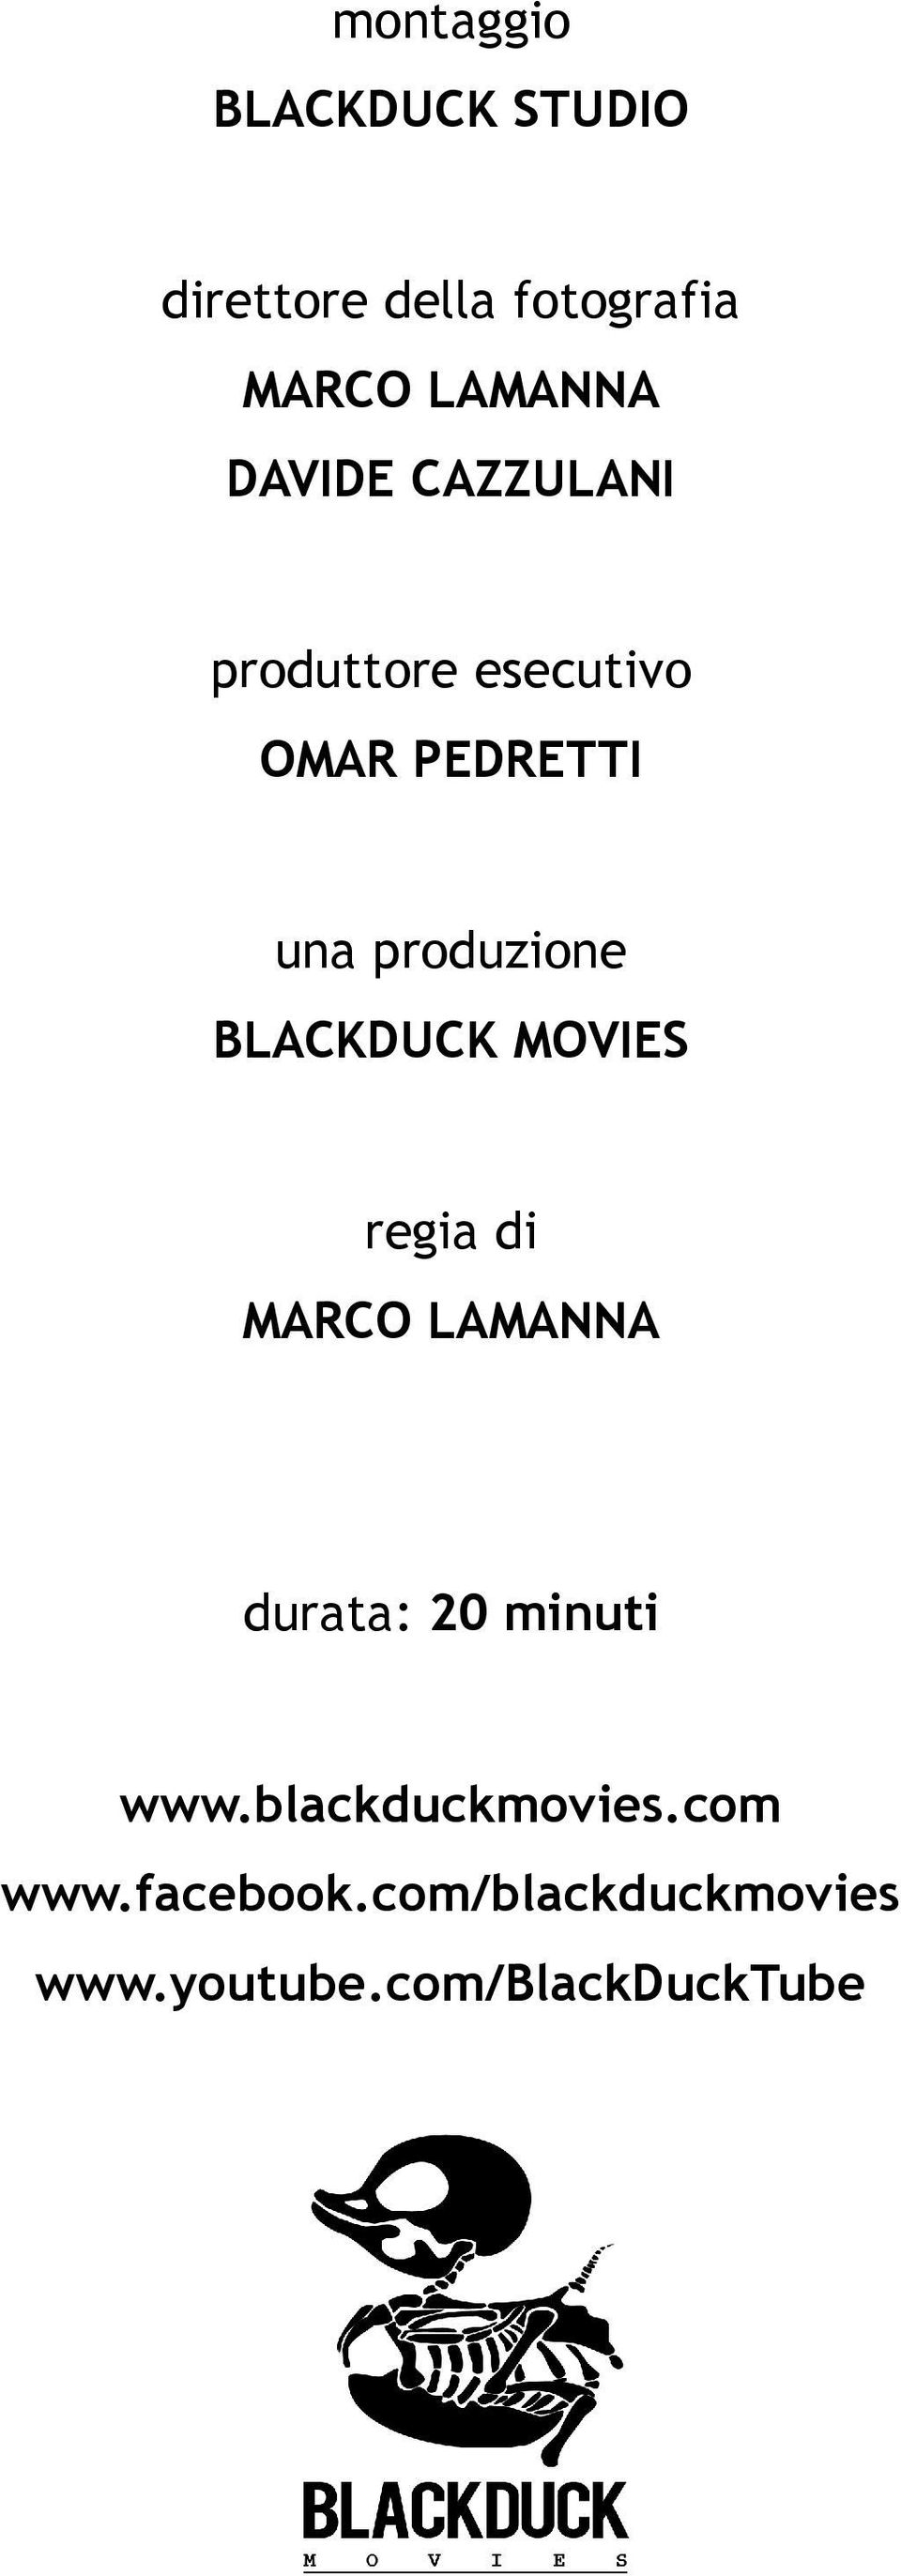 BLACKDUCK MOVIES regia di MARCO LAMANNA durata: 20 minuti www.